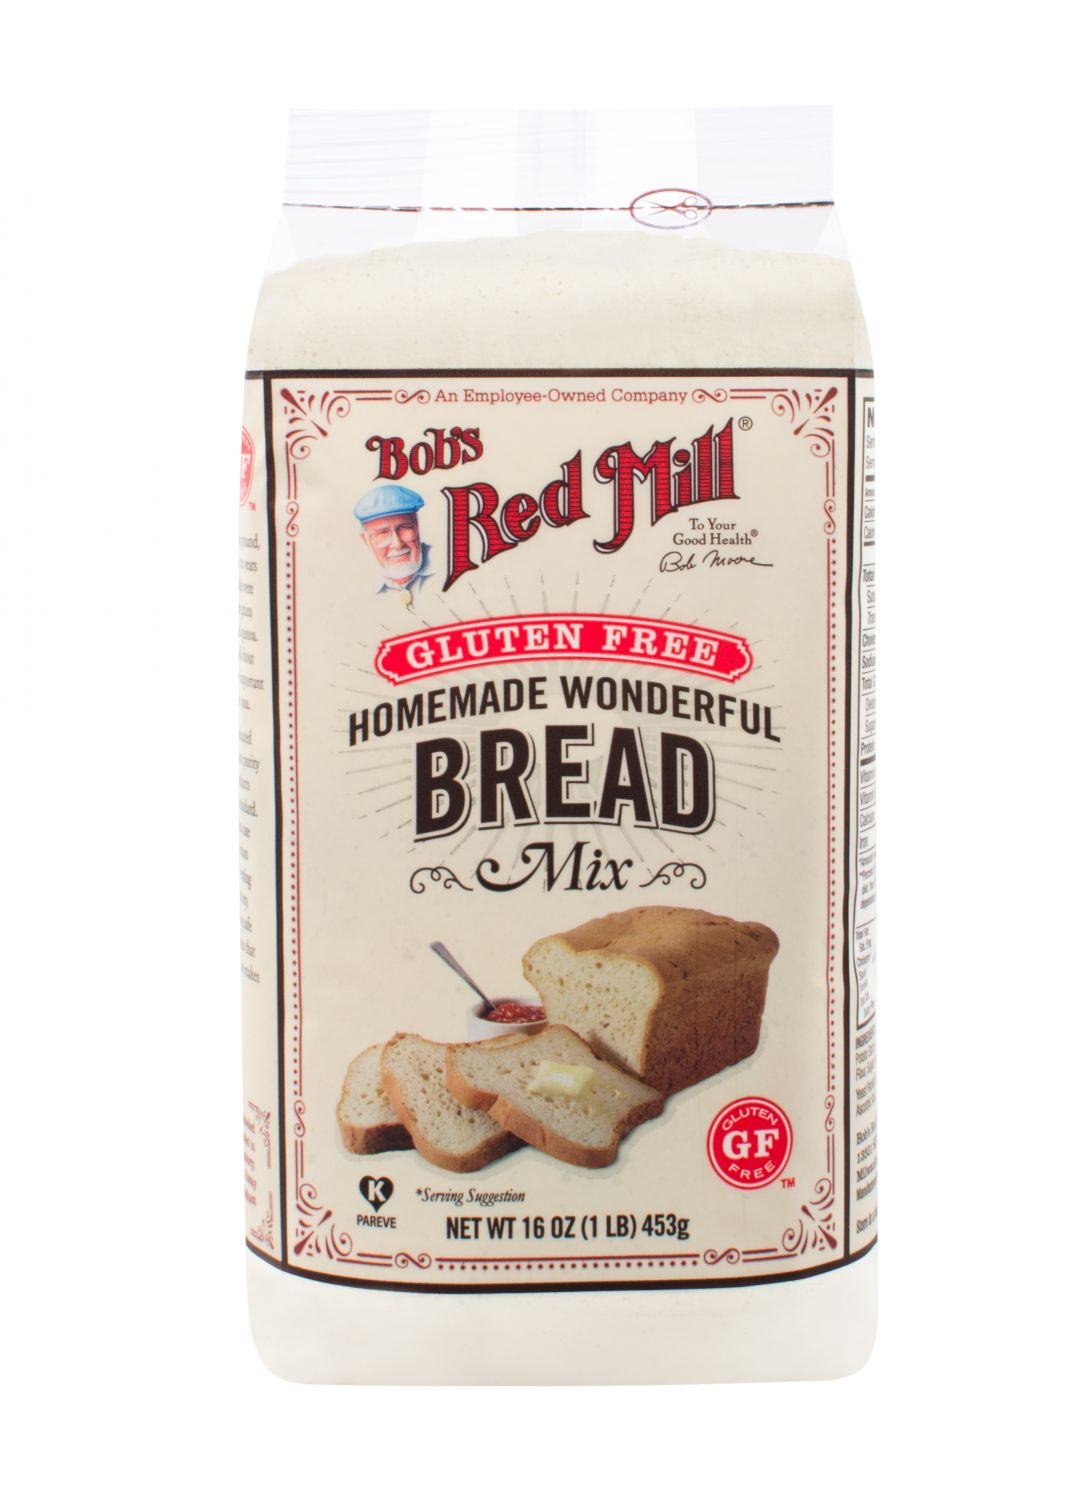 Homemade Wonderful Bread Mix - Gluten Free